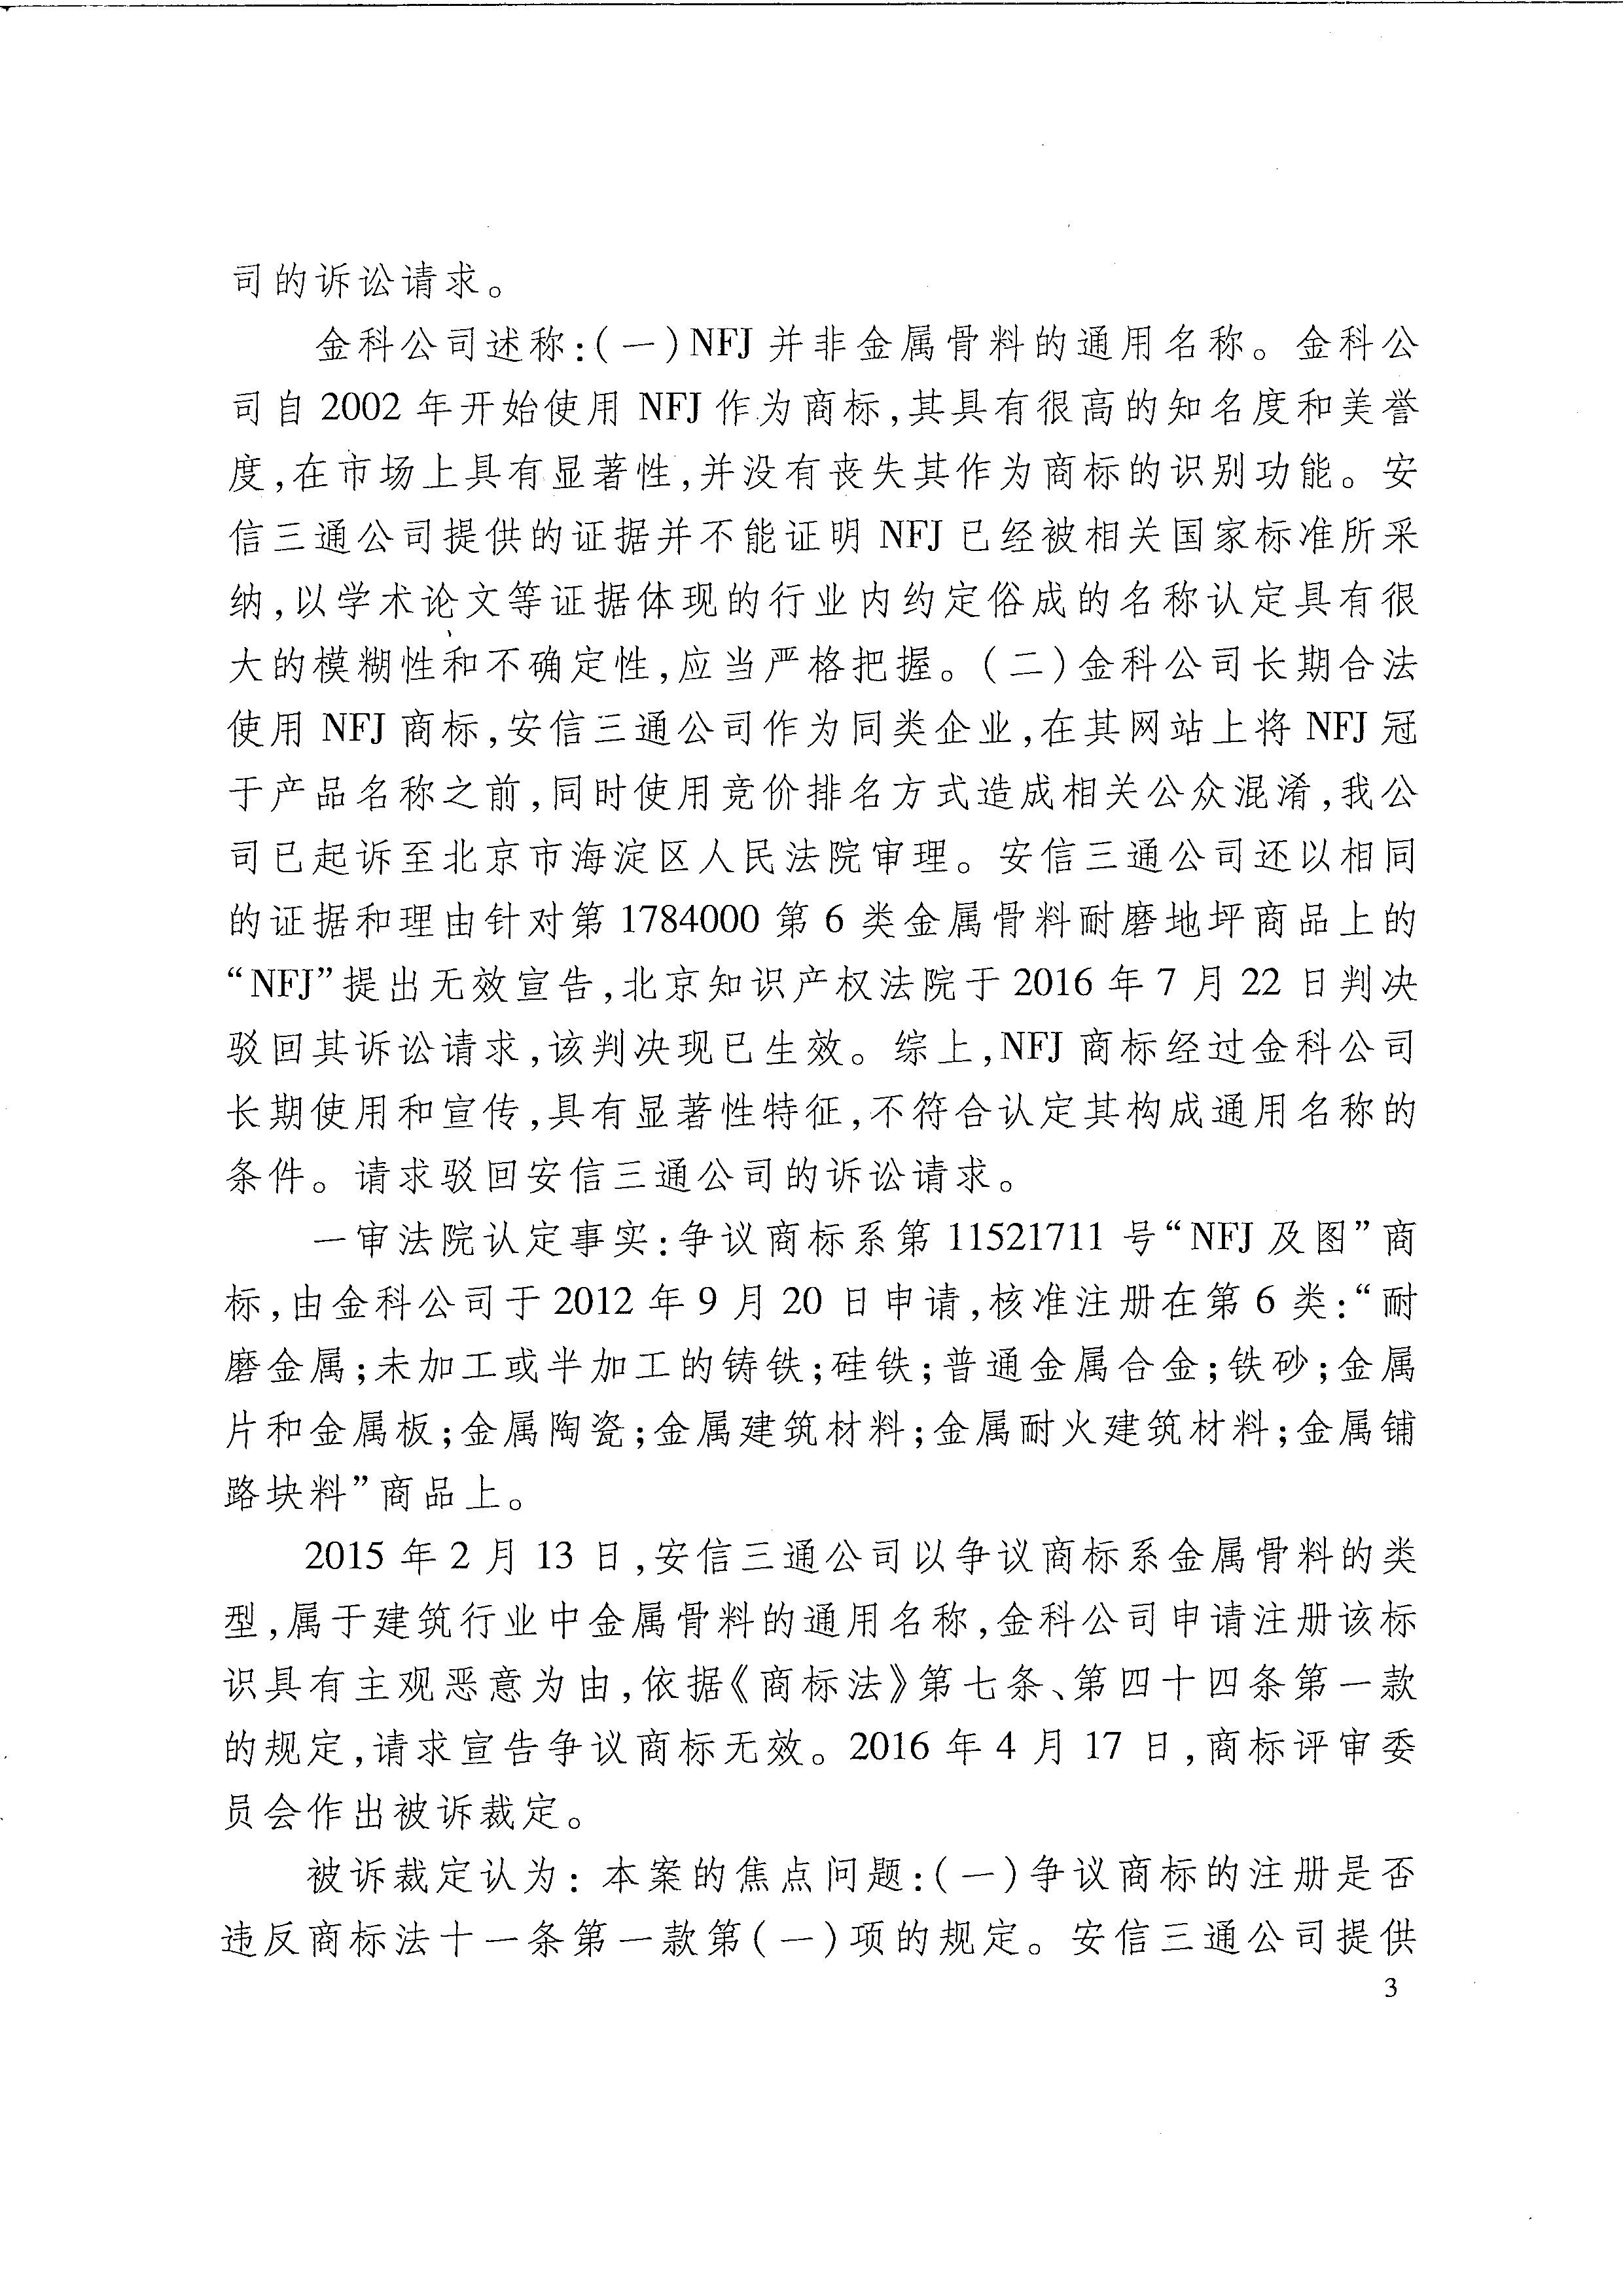 再审行政判决书(1)_Page_03.png